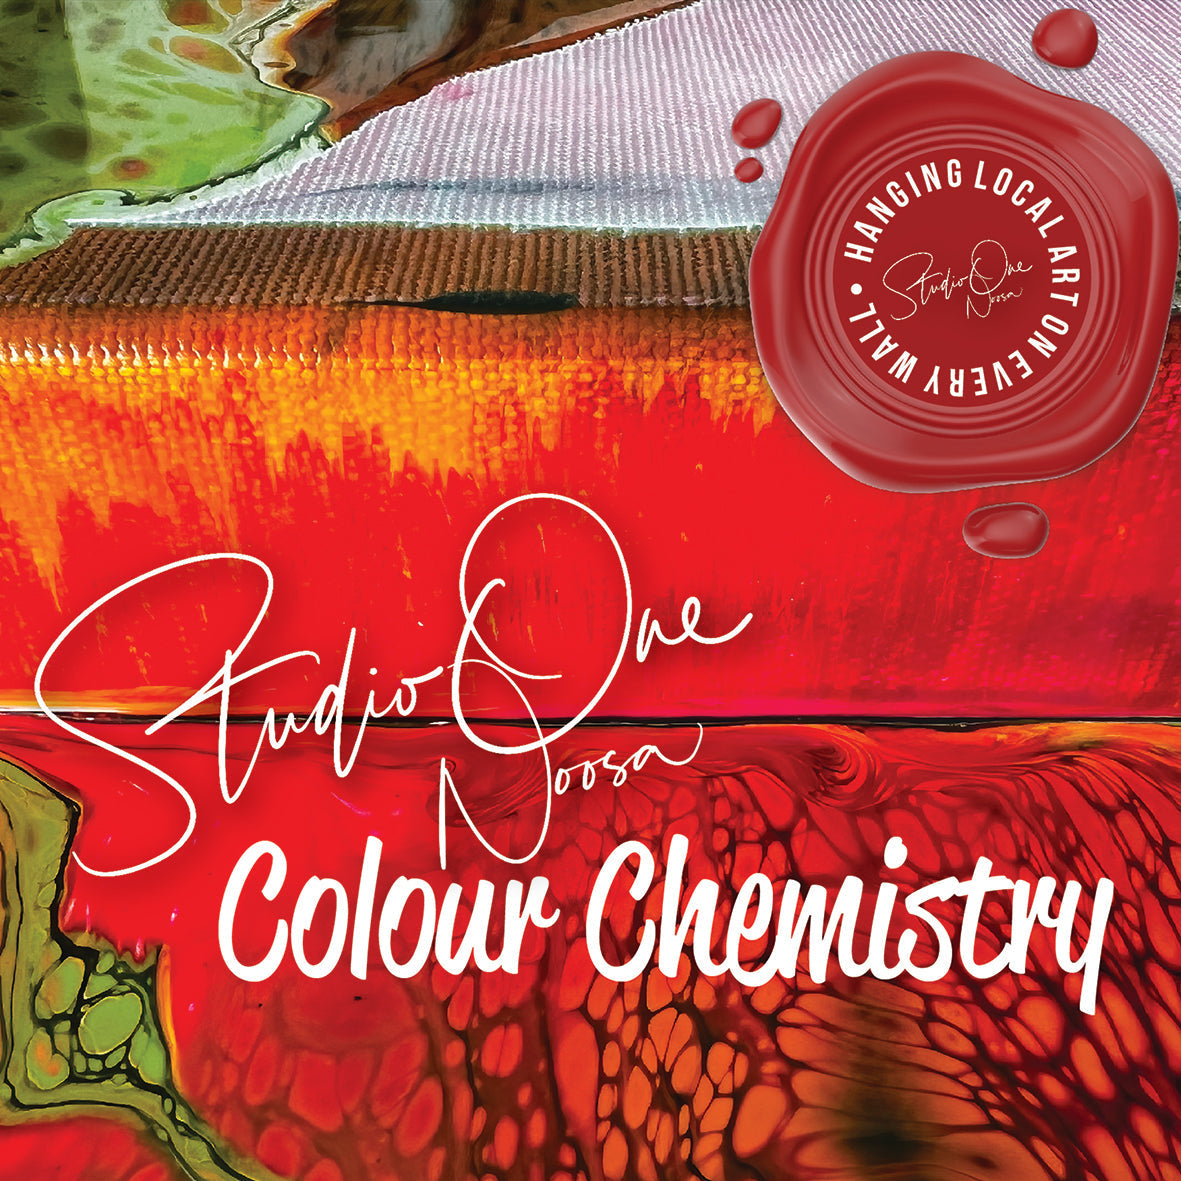 8th March 24 - Sip & Pour  - Colour Chemistry Workshop - 5:30PM to 8:00PM